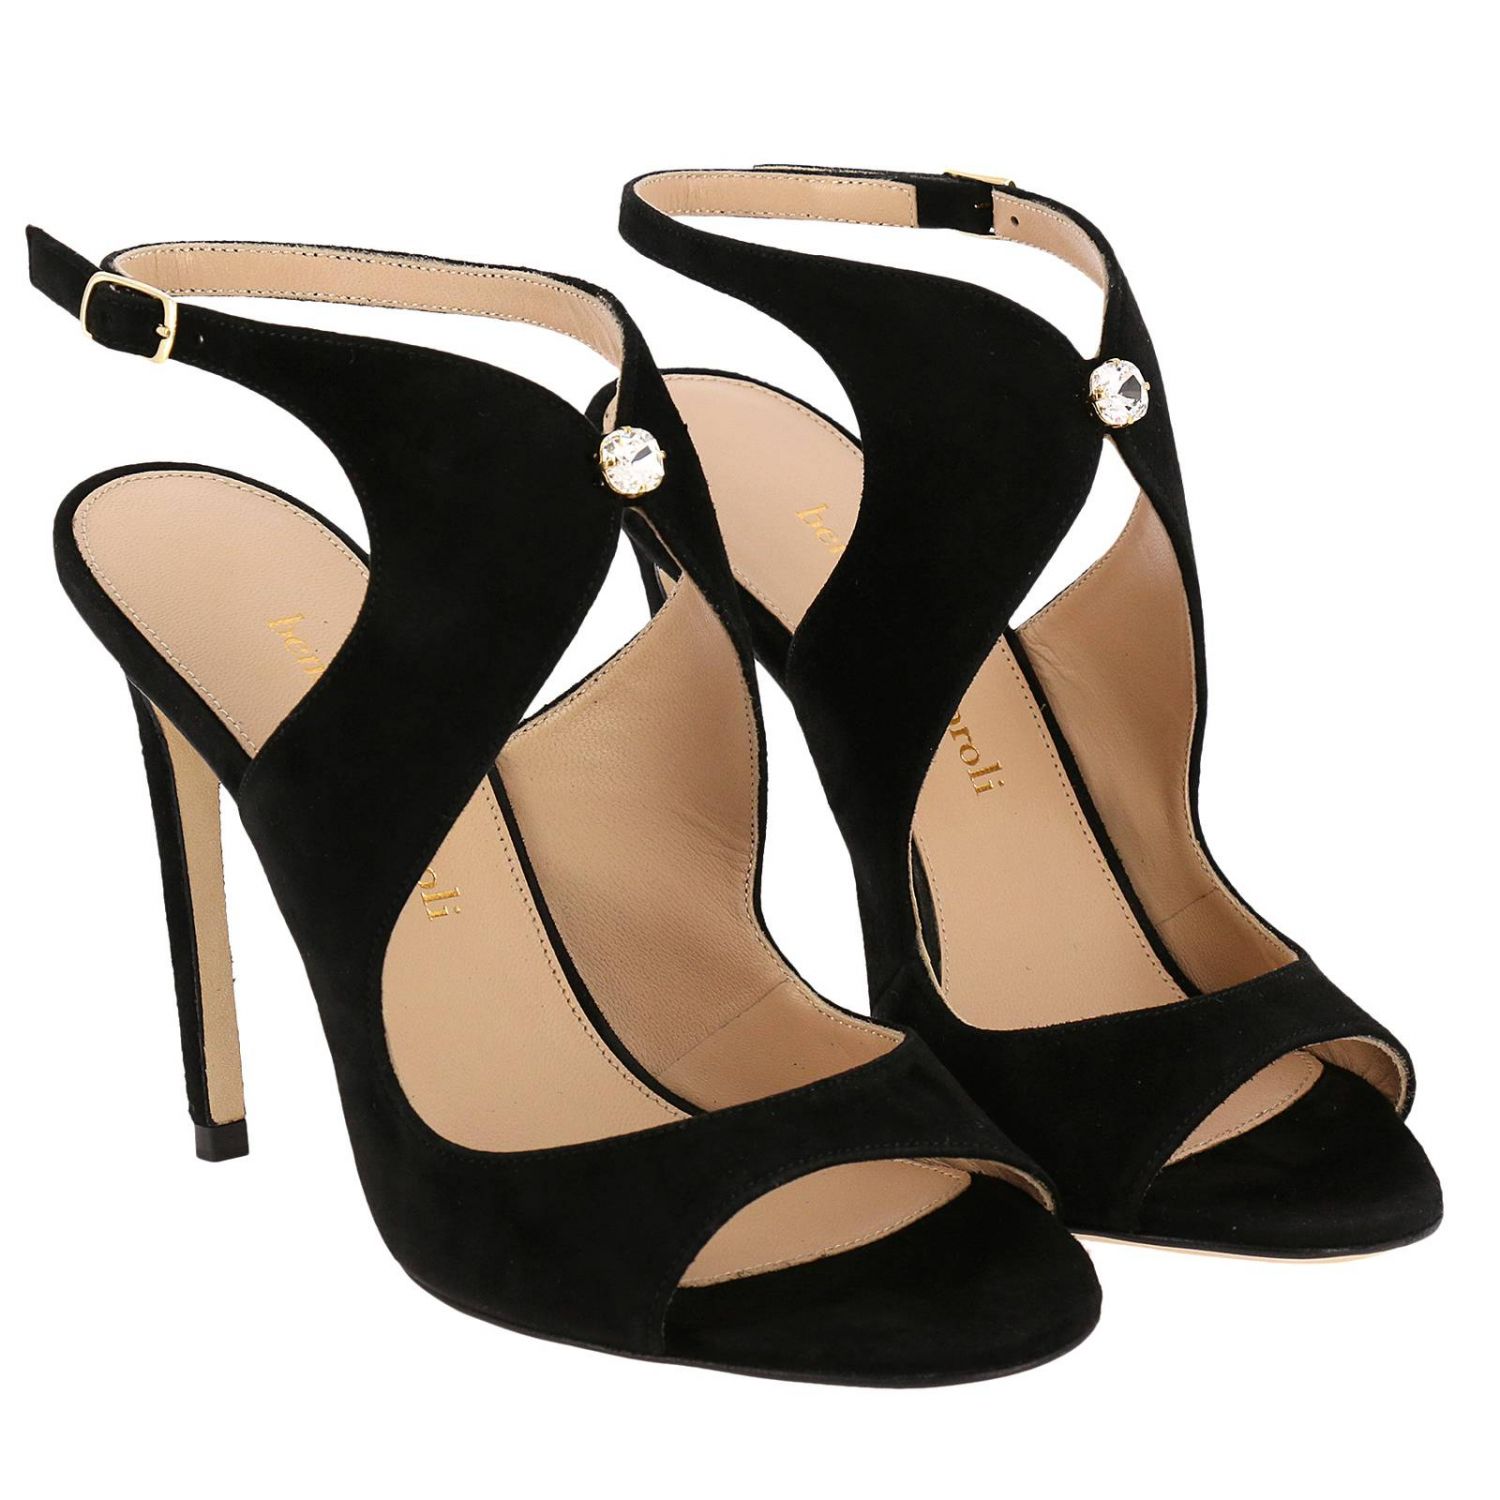 Benedetta Boroli Outlet: Shoes women - Black | Heeled Sandals Benedetta ...